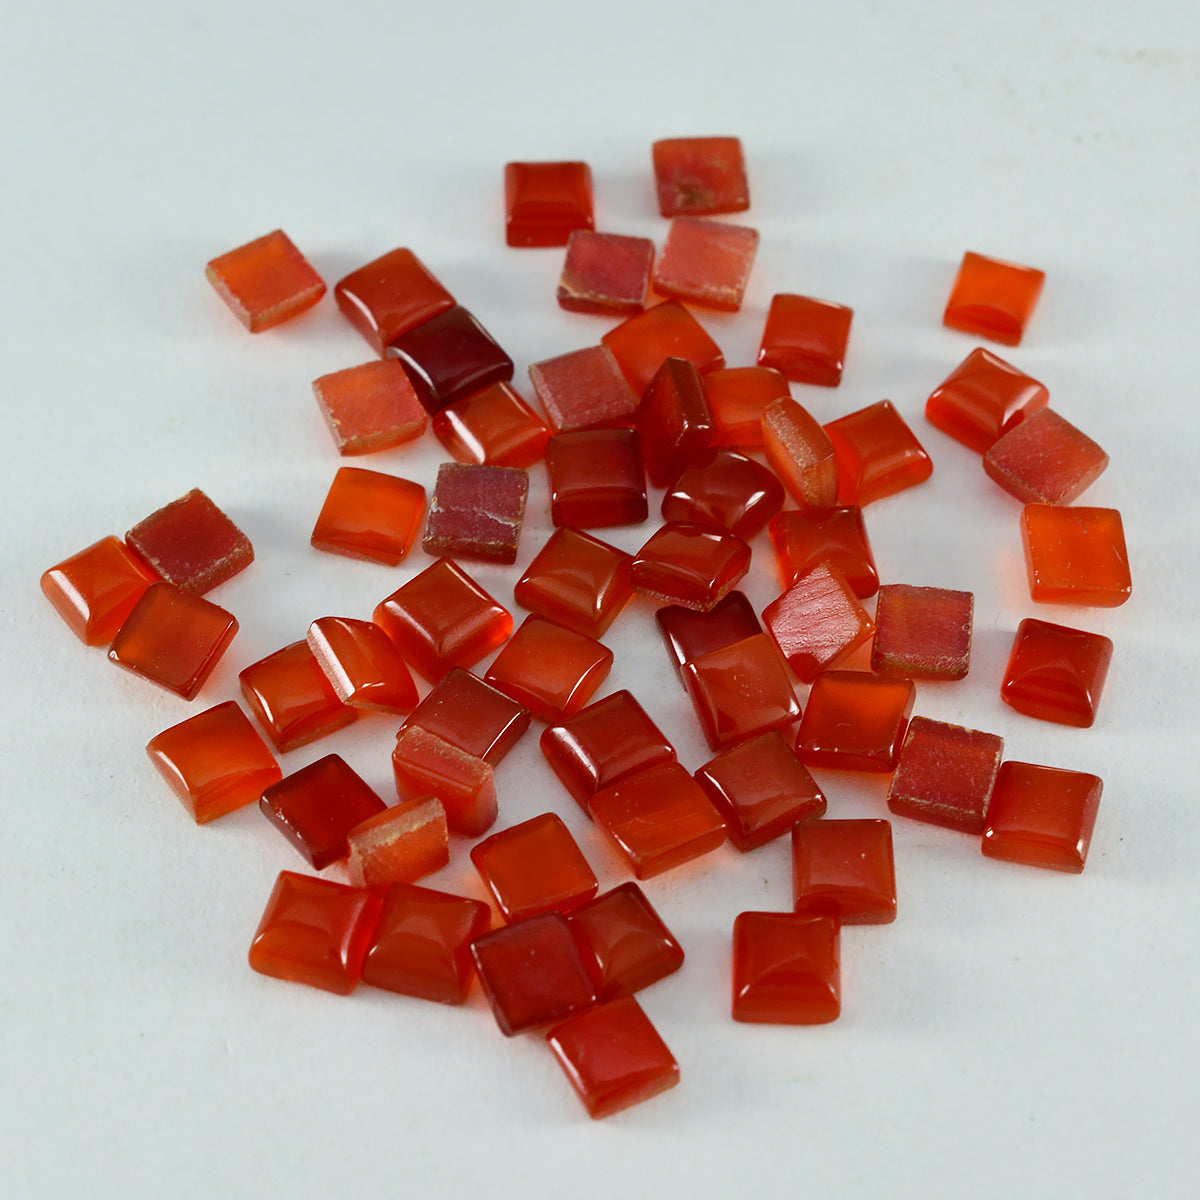 riyogems 1st röd onyx cabochon 7x7 mm kvadratisk form a+1 kvalitets lösa ädelstenar